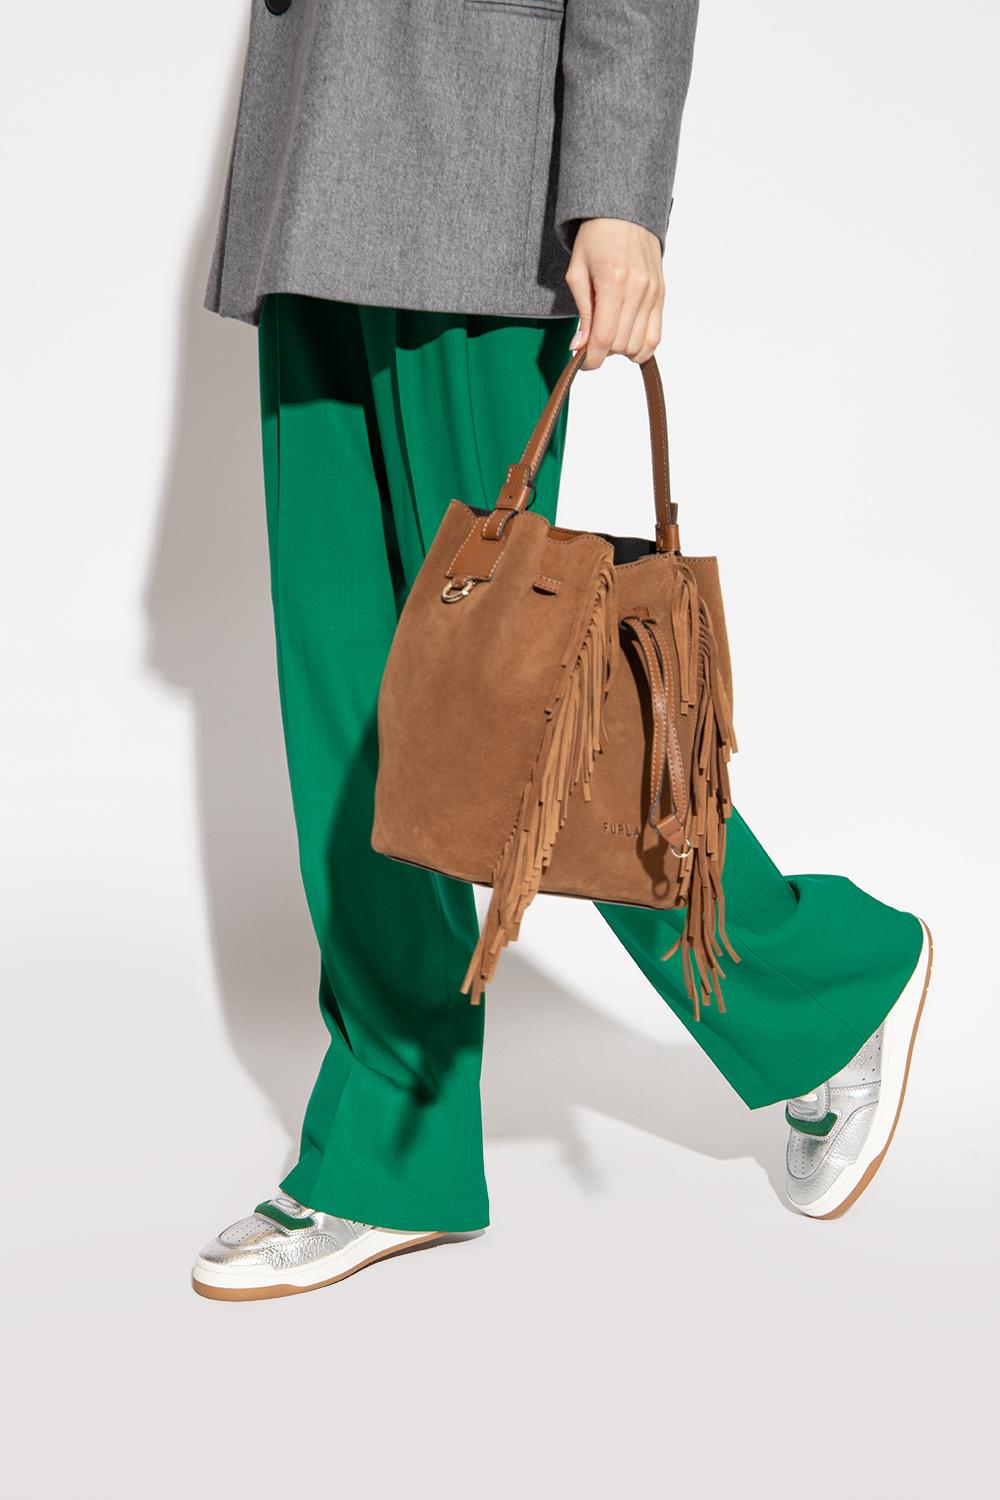 Furla Miastella Small Leather Bucket Bag in Green